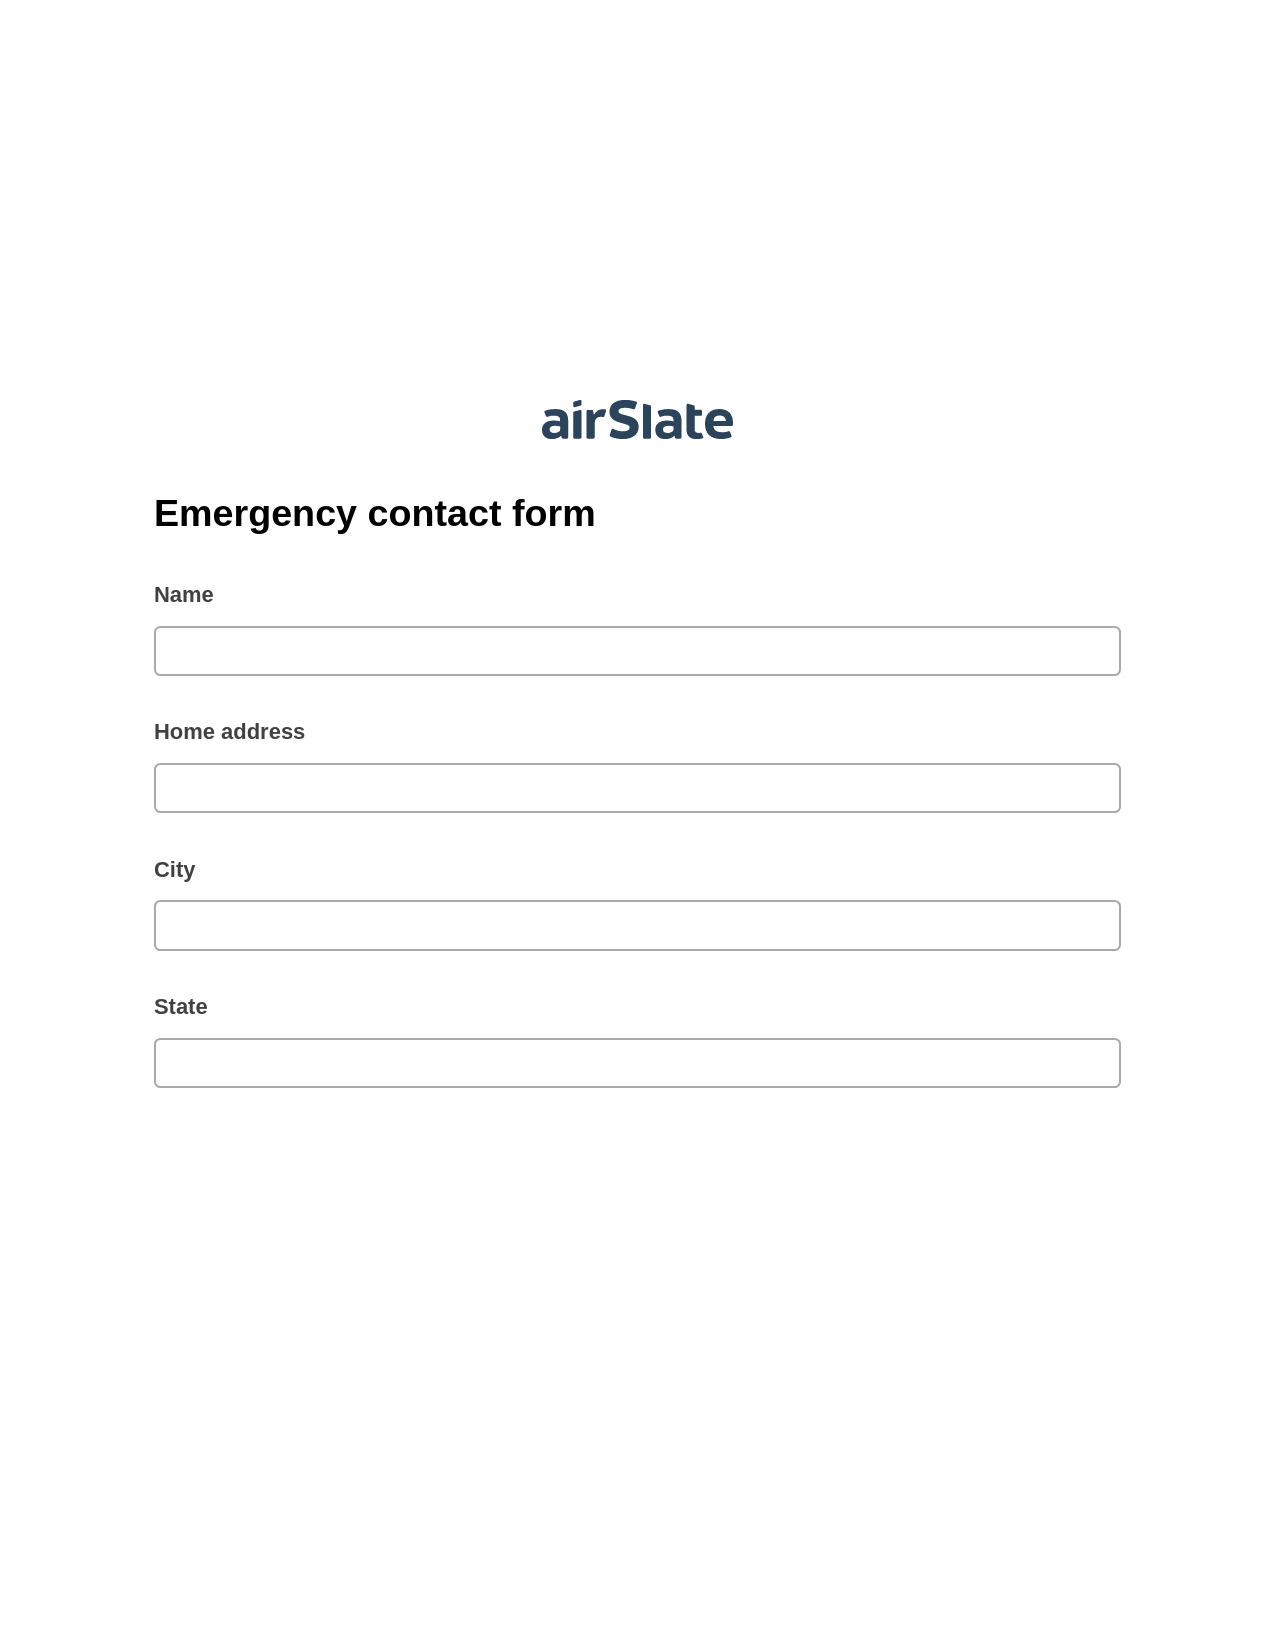 Multirole Emergency contact form Pre-fill from CSV File Dropdown Options Bot, Invoke Salesforce Process Bot, Slack Notification Postfinish Bot